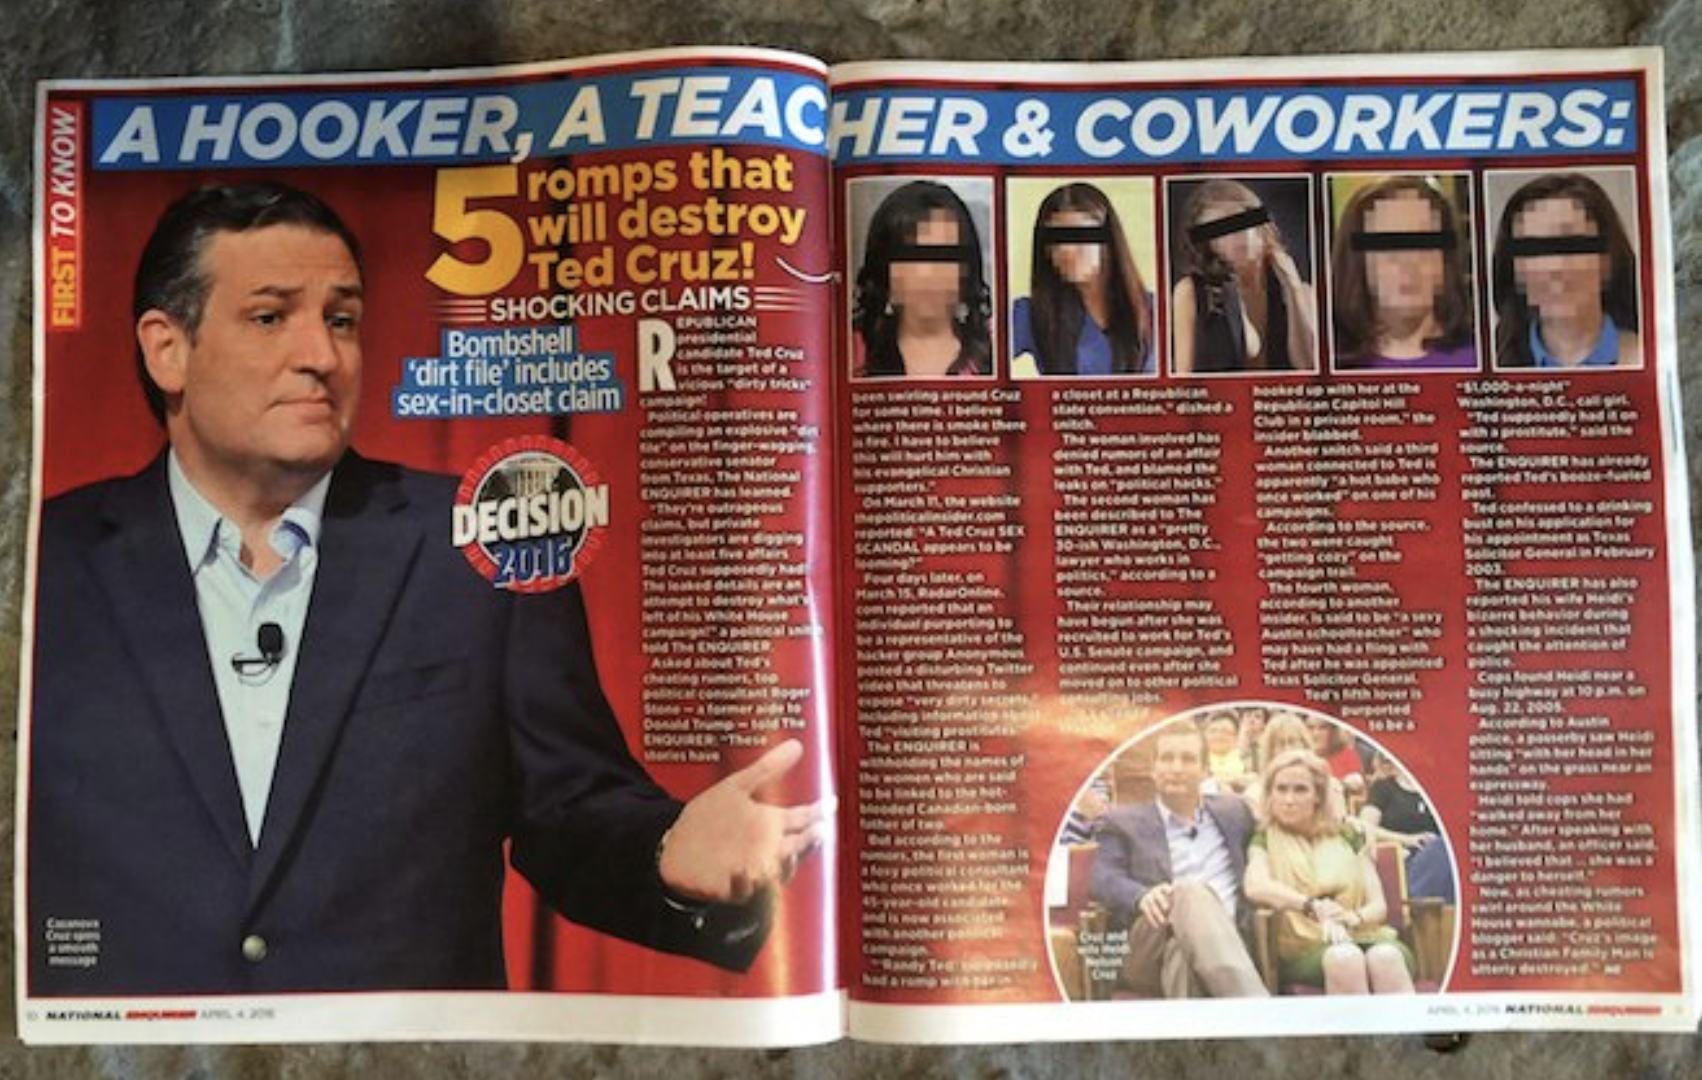 2016 National Enquirer story alleging that Texas senator Ted Cruz had five secret mistresses